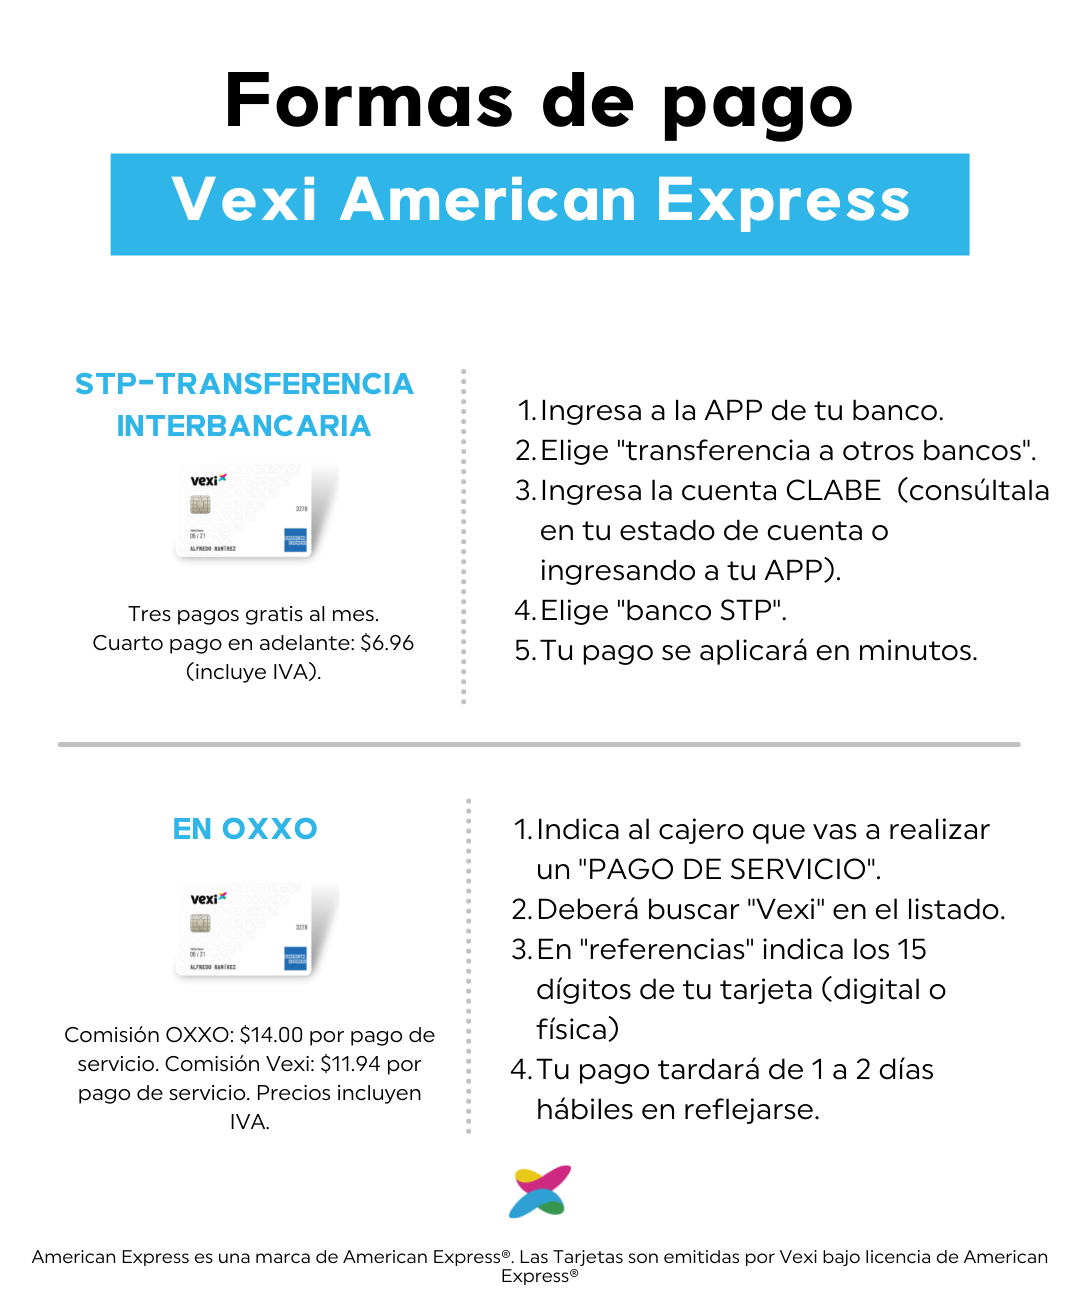 Vexi_American_Express_y_Carnet__3_pagos_stp_gratis___3_.png